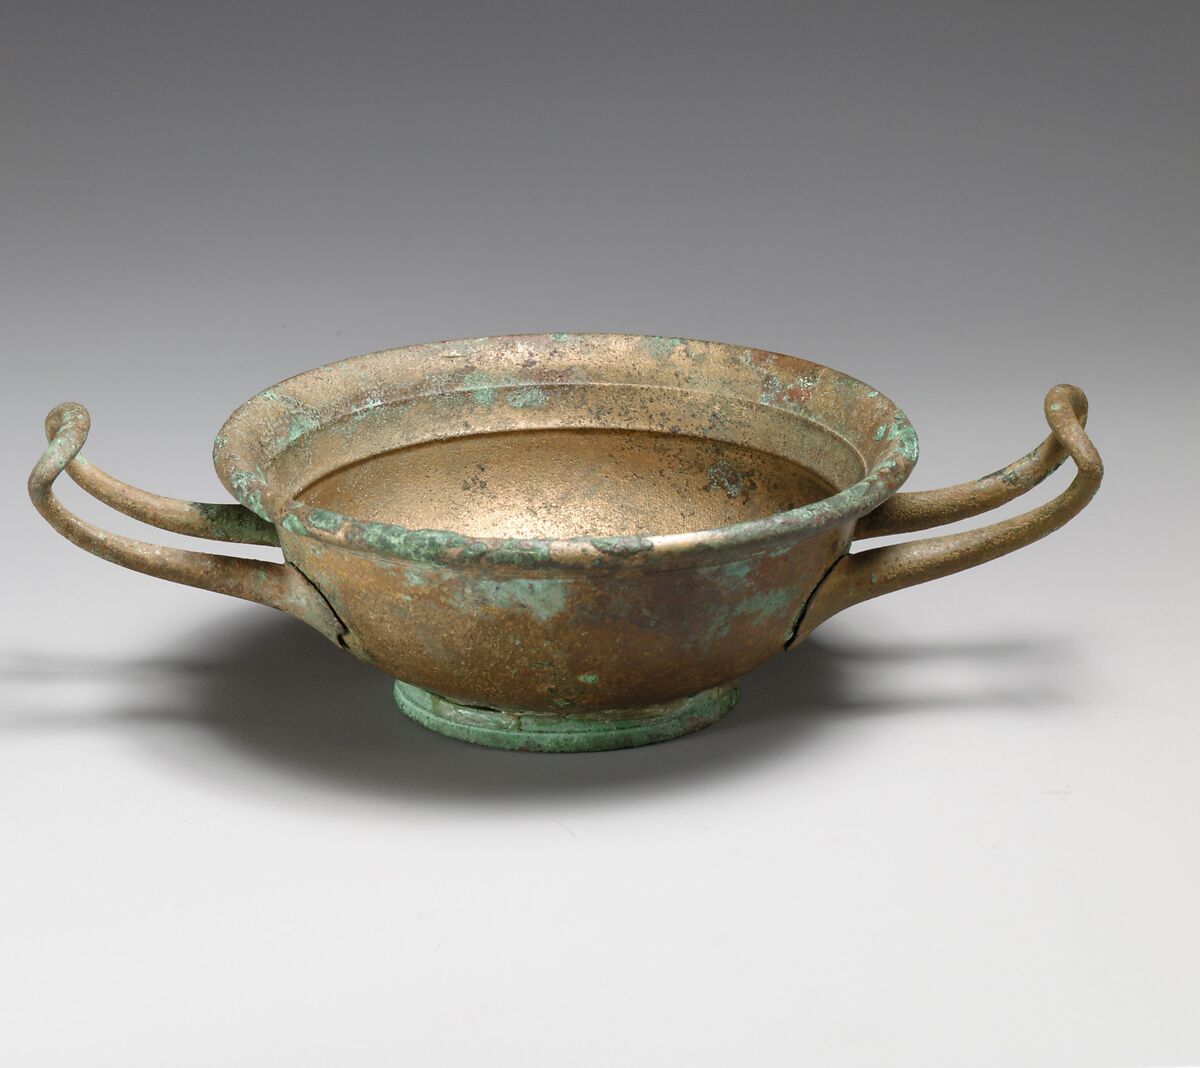 Bronze kylix (drinking cup), Bronze, Greek 